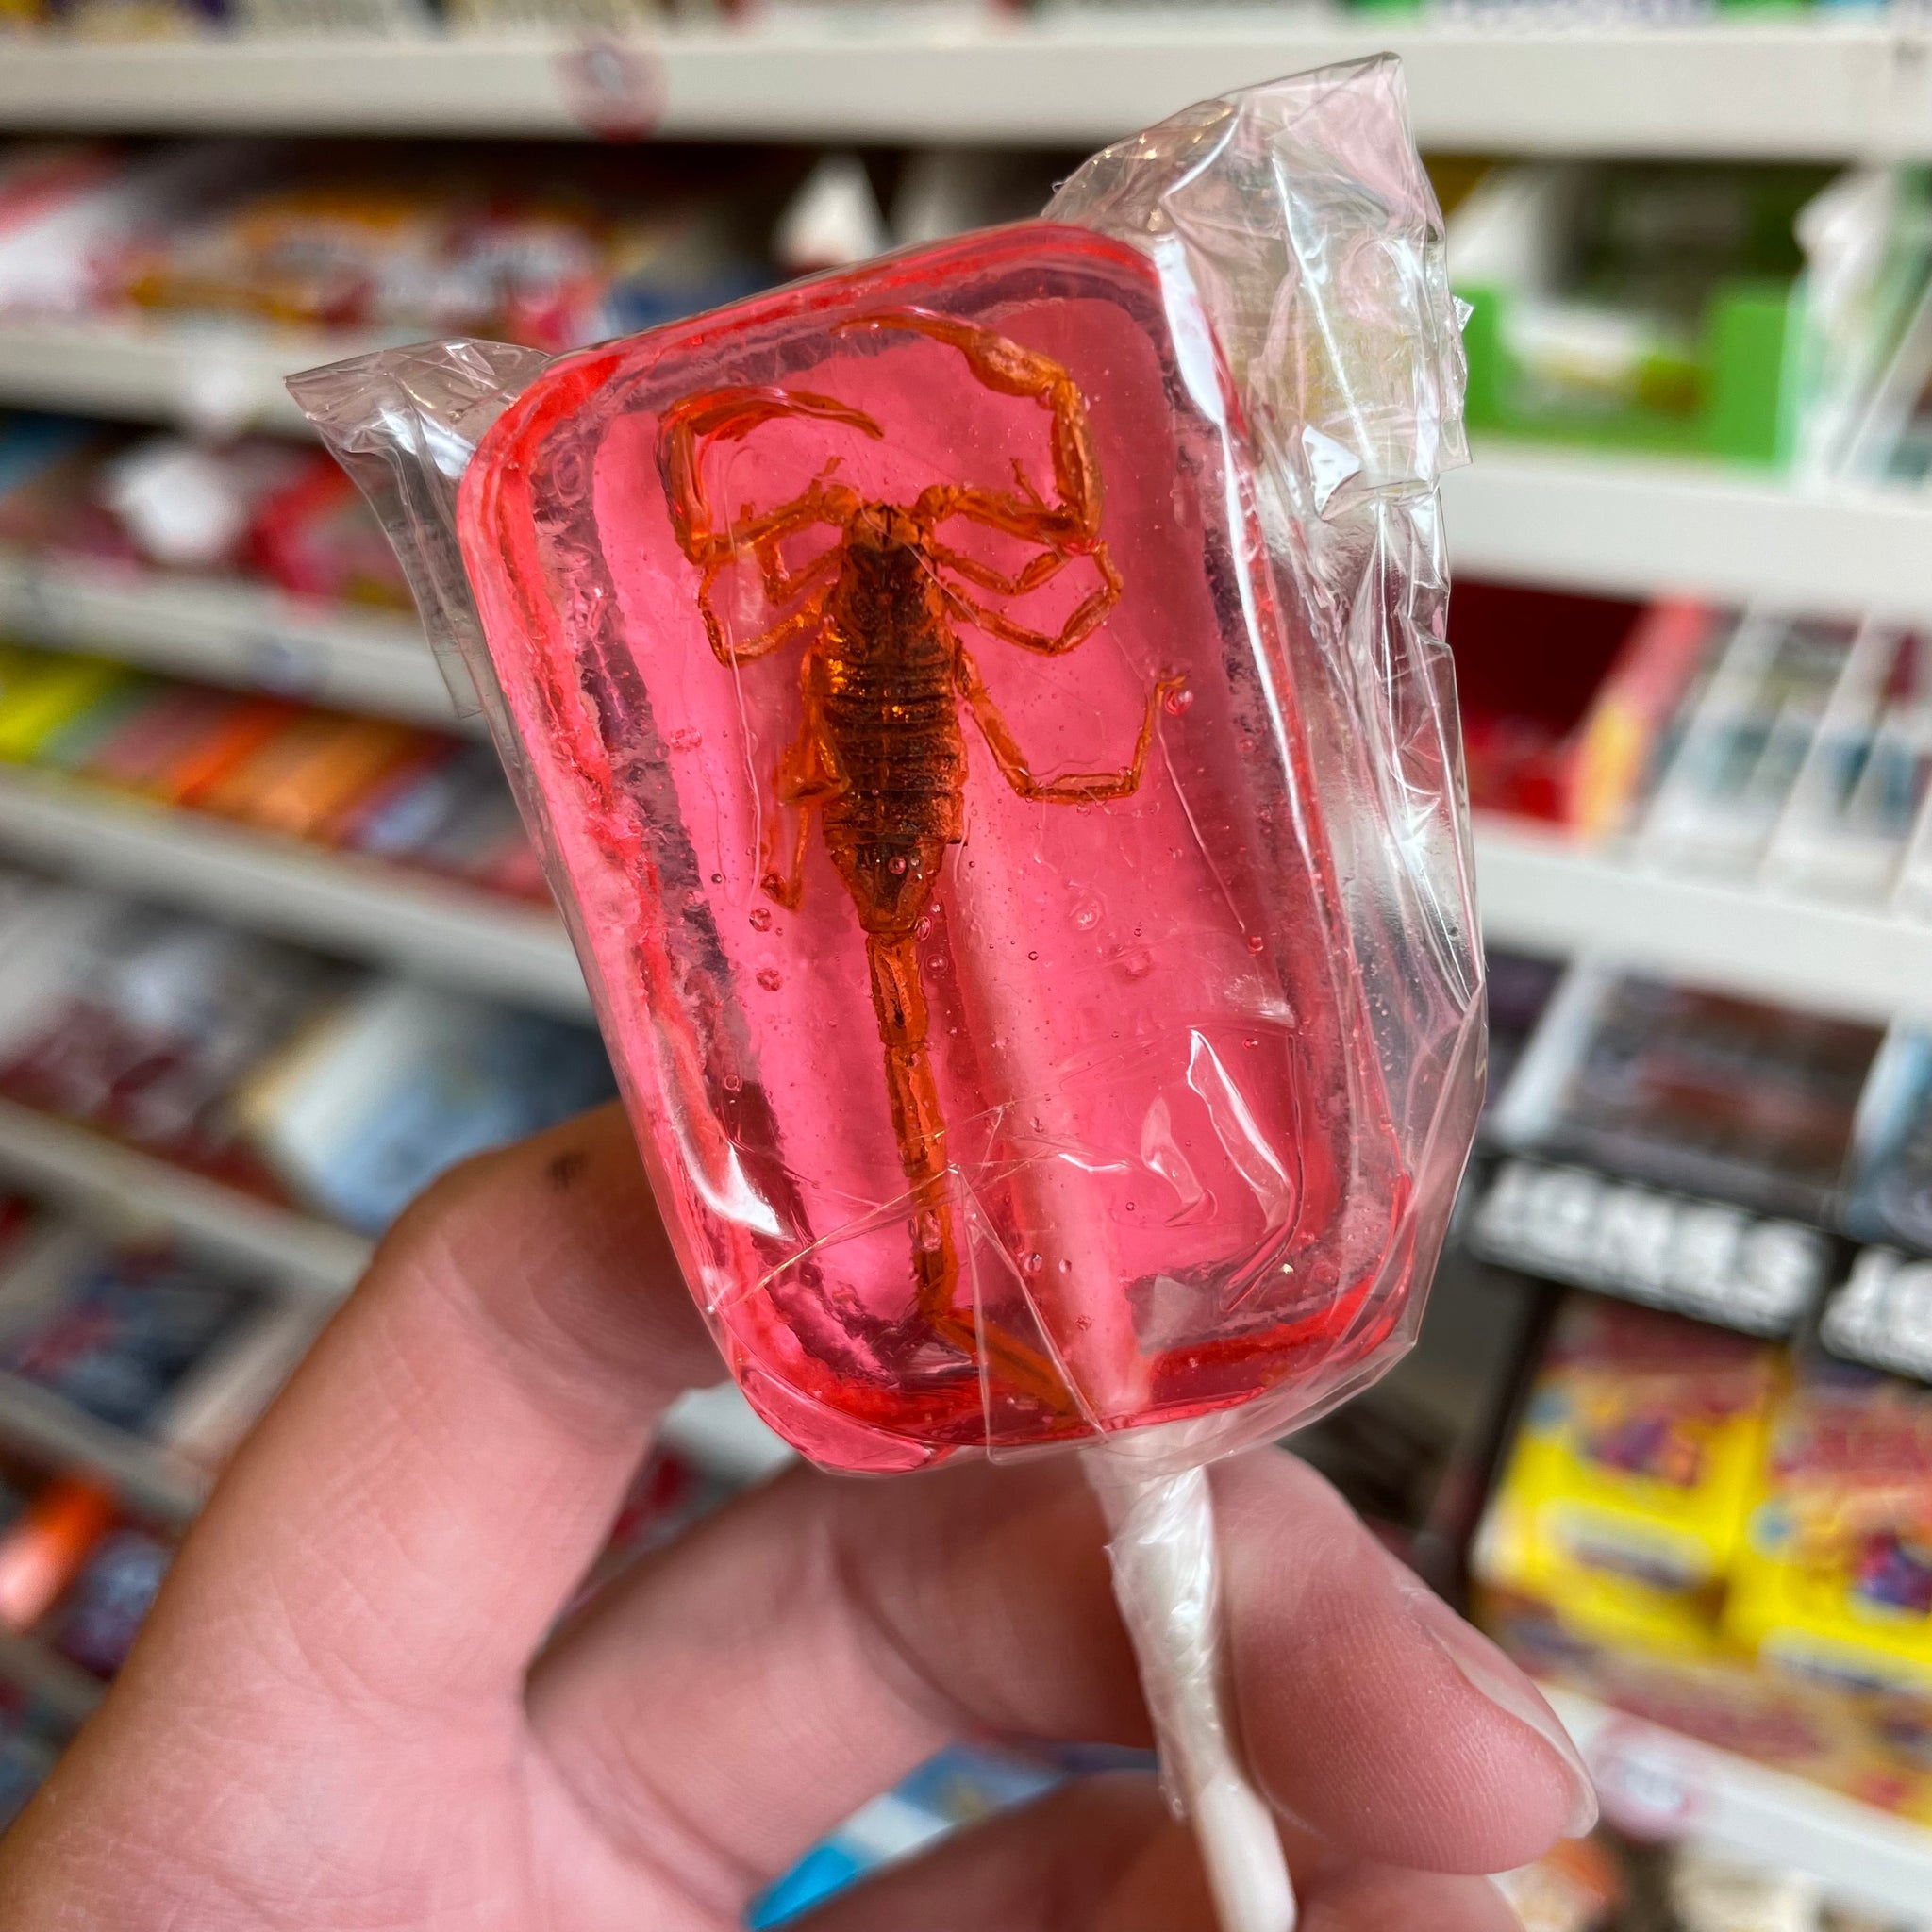 Strawberry Scorpion Sucker